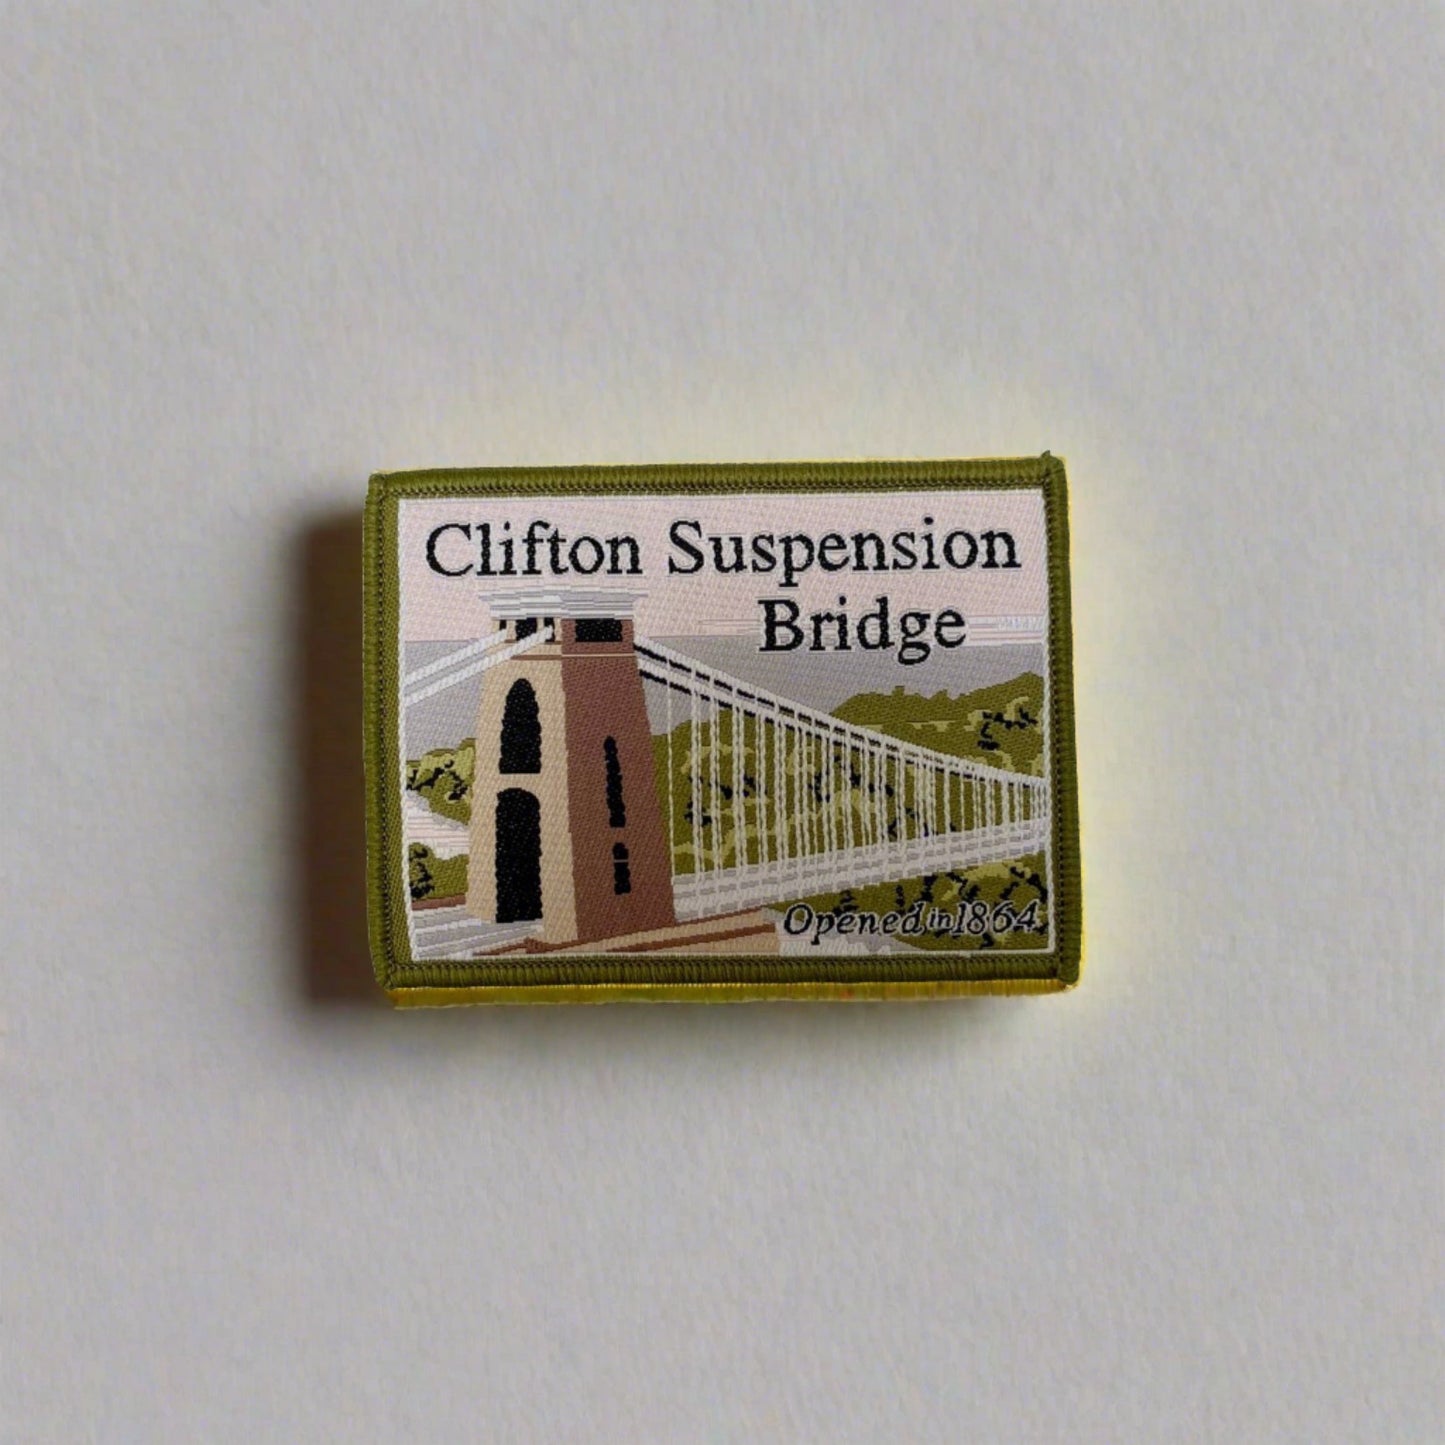 Clifton Suspension Bridge Embroidered Badge